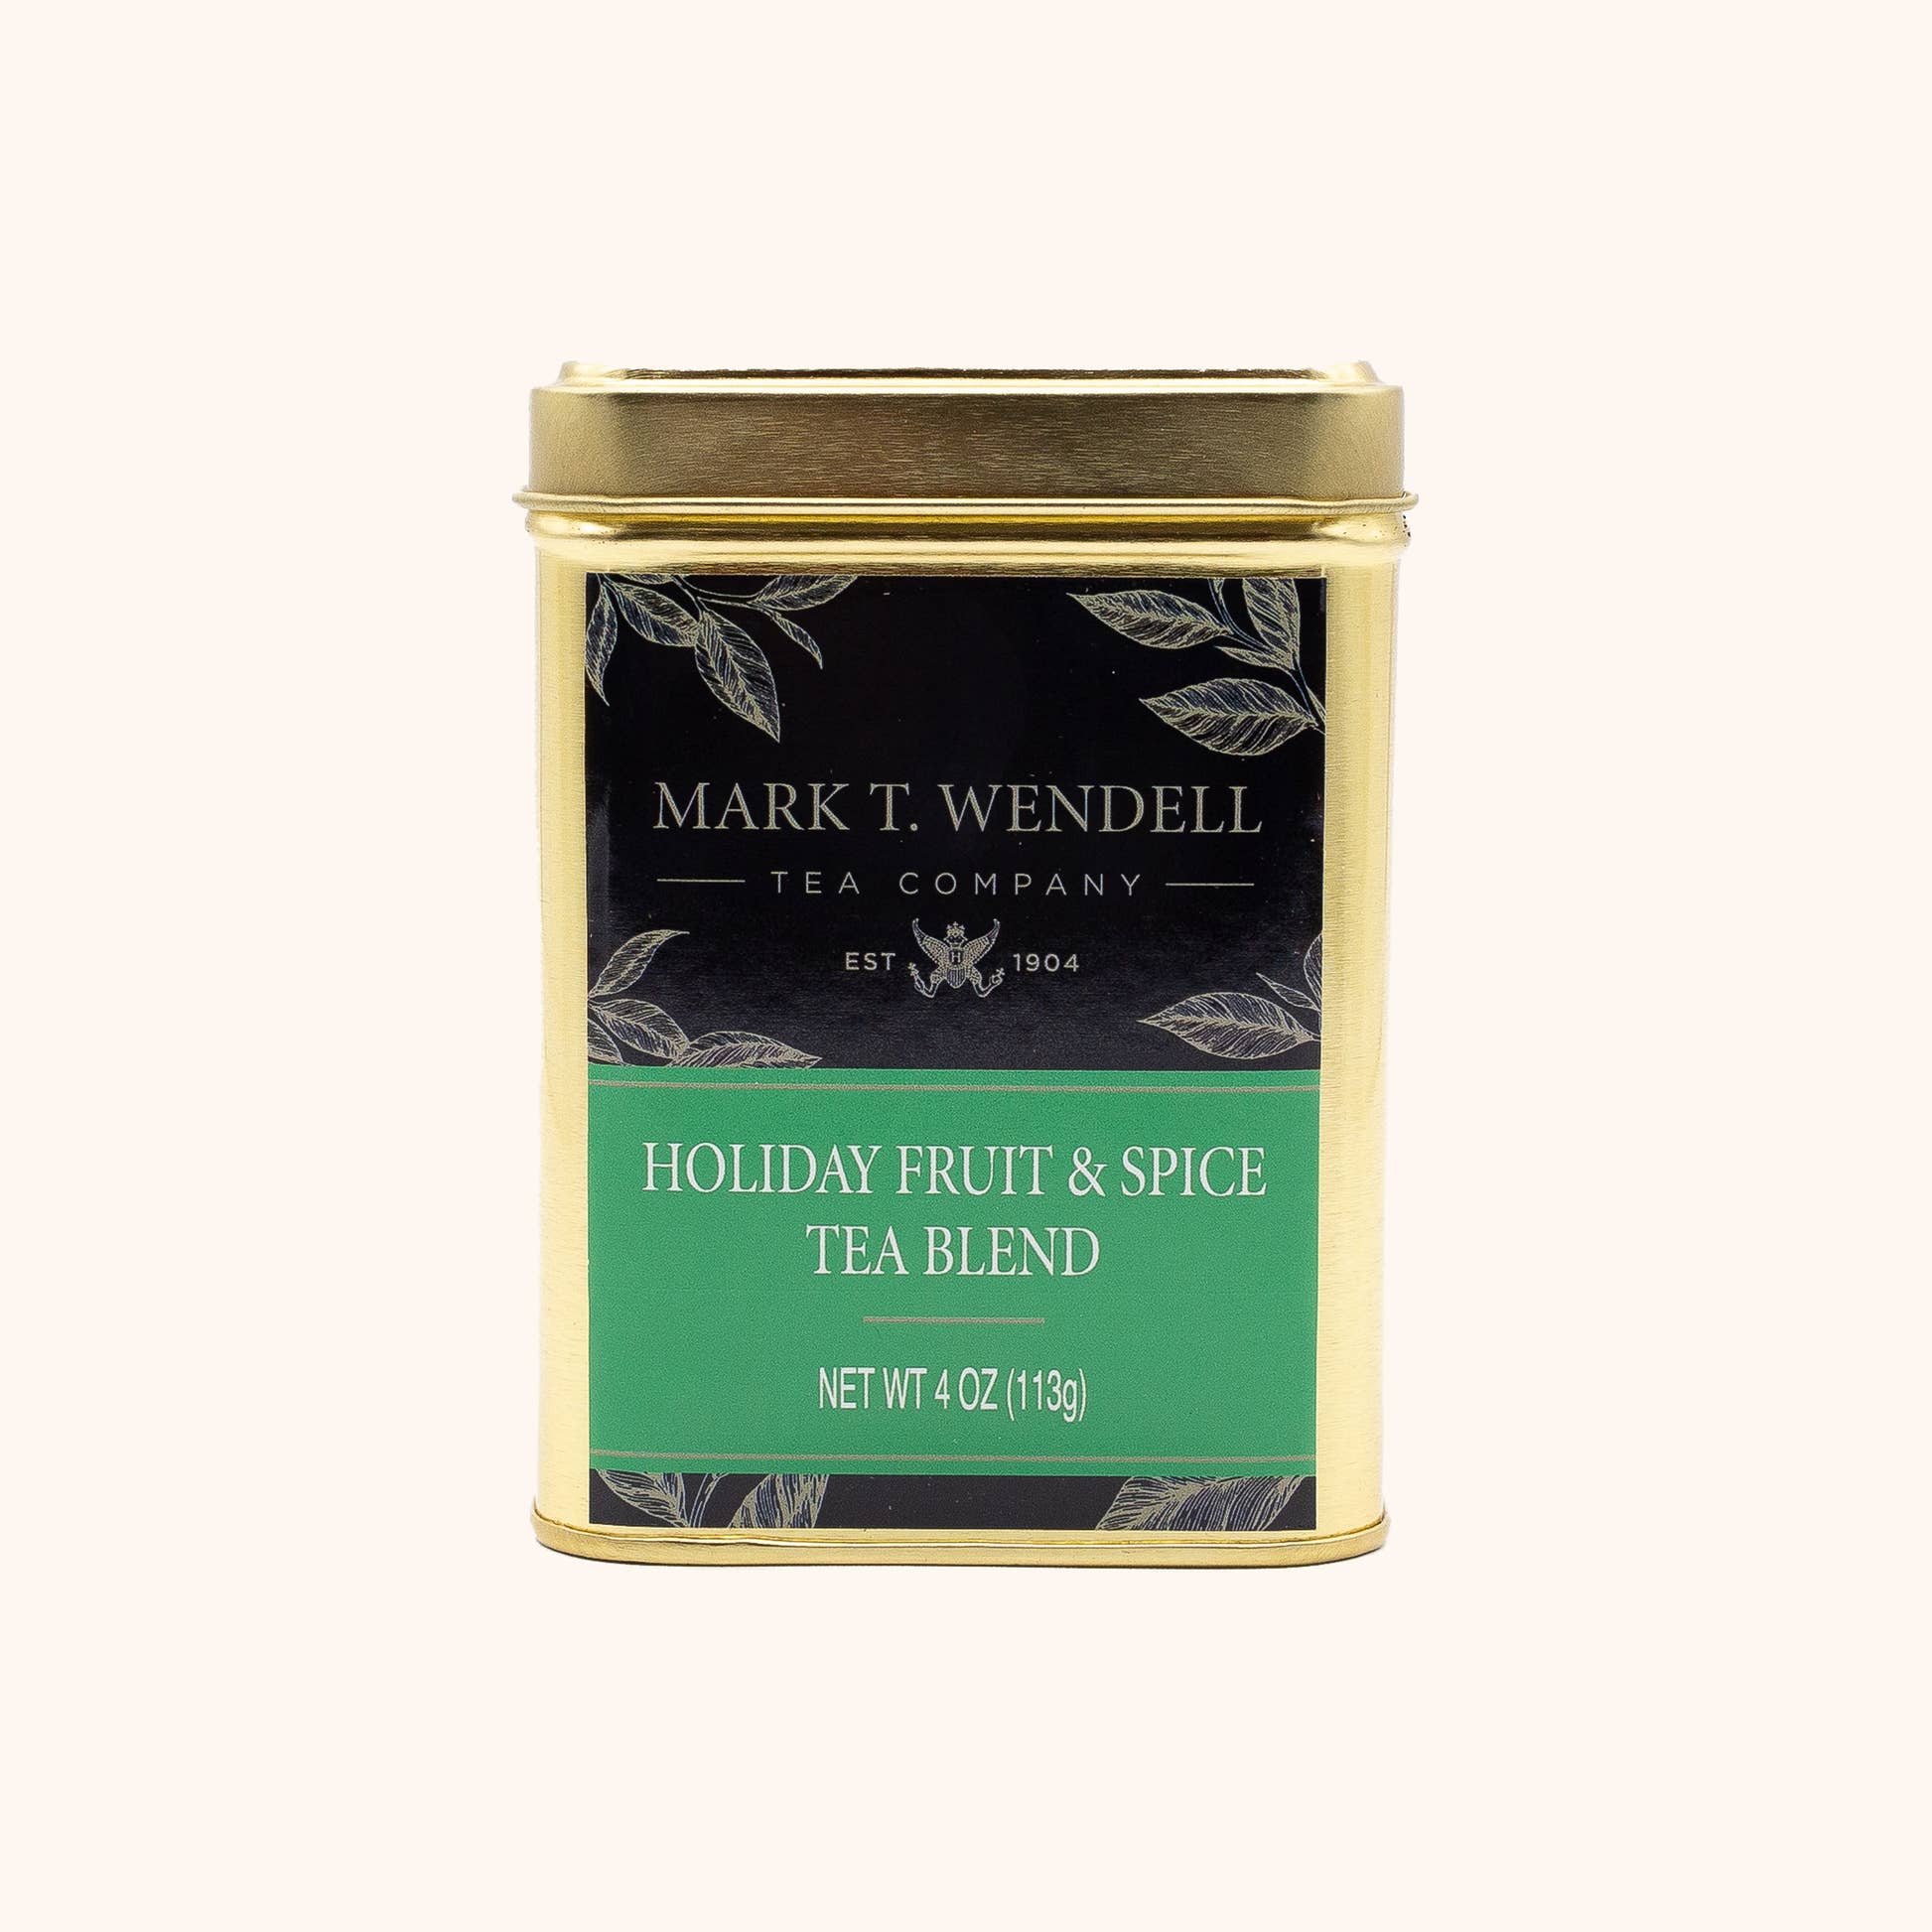 Holiday Fruit & Spice Tea Blend by Mark T. Wendell Tea Co loose leaf tea tin